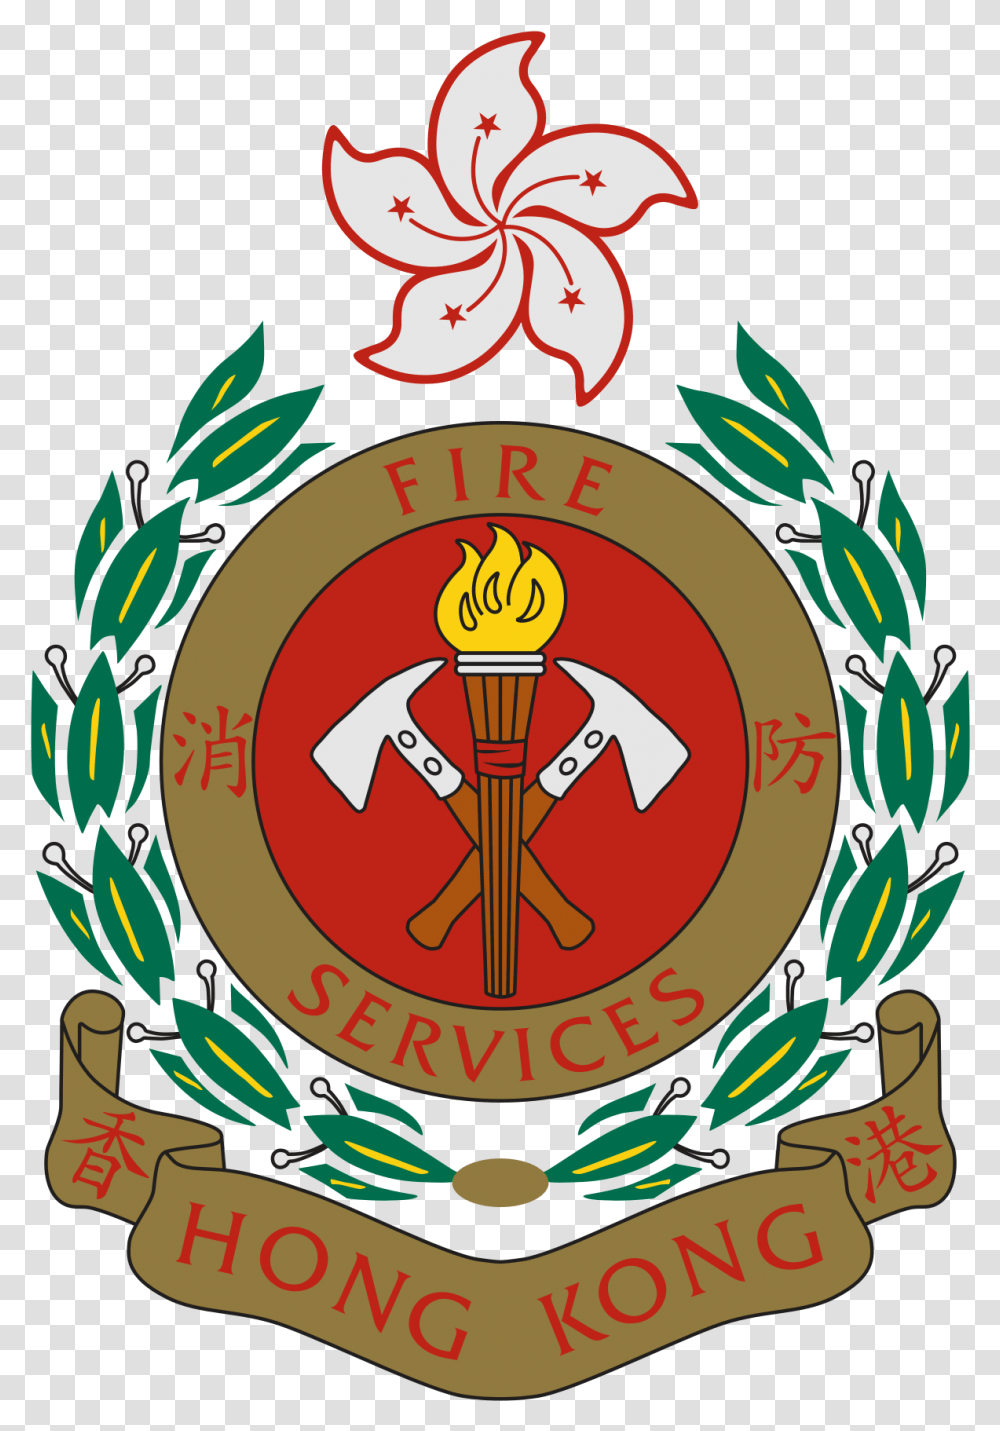 Hong Kong Fire Services Department Fire Services Department Logo, Graphics, Outdoors, Light, Sea Transparent Png